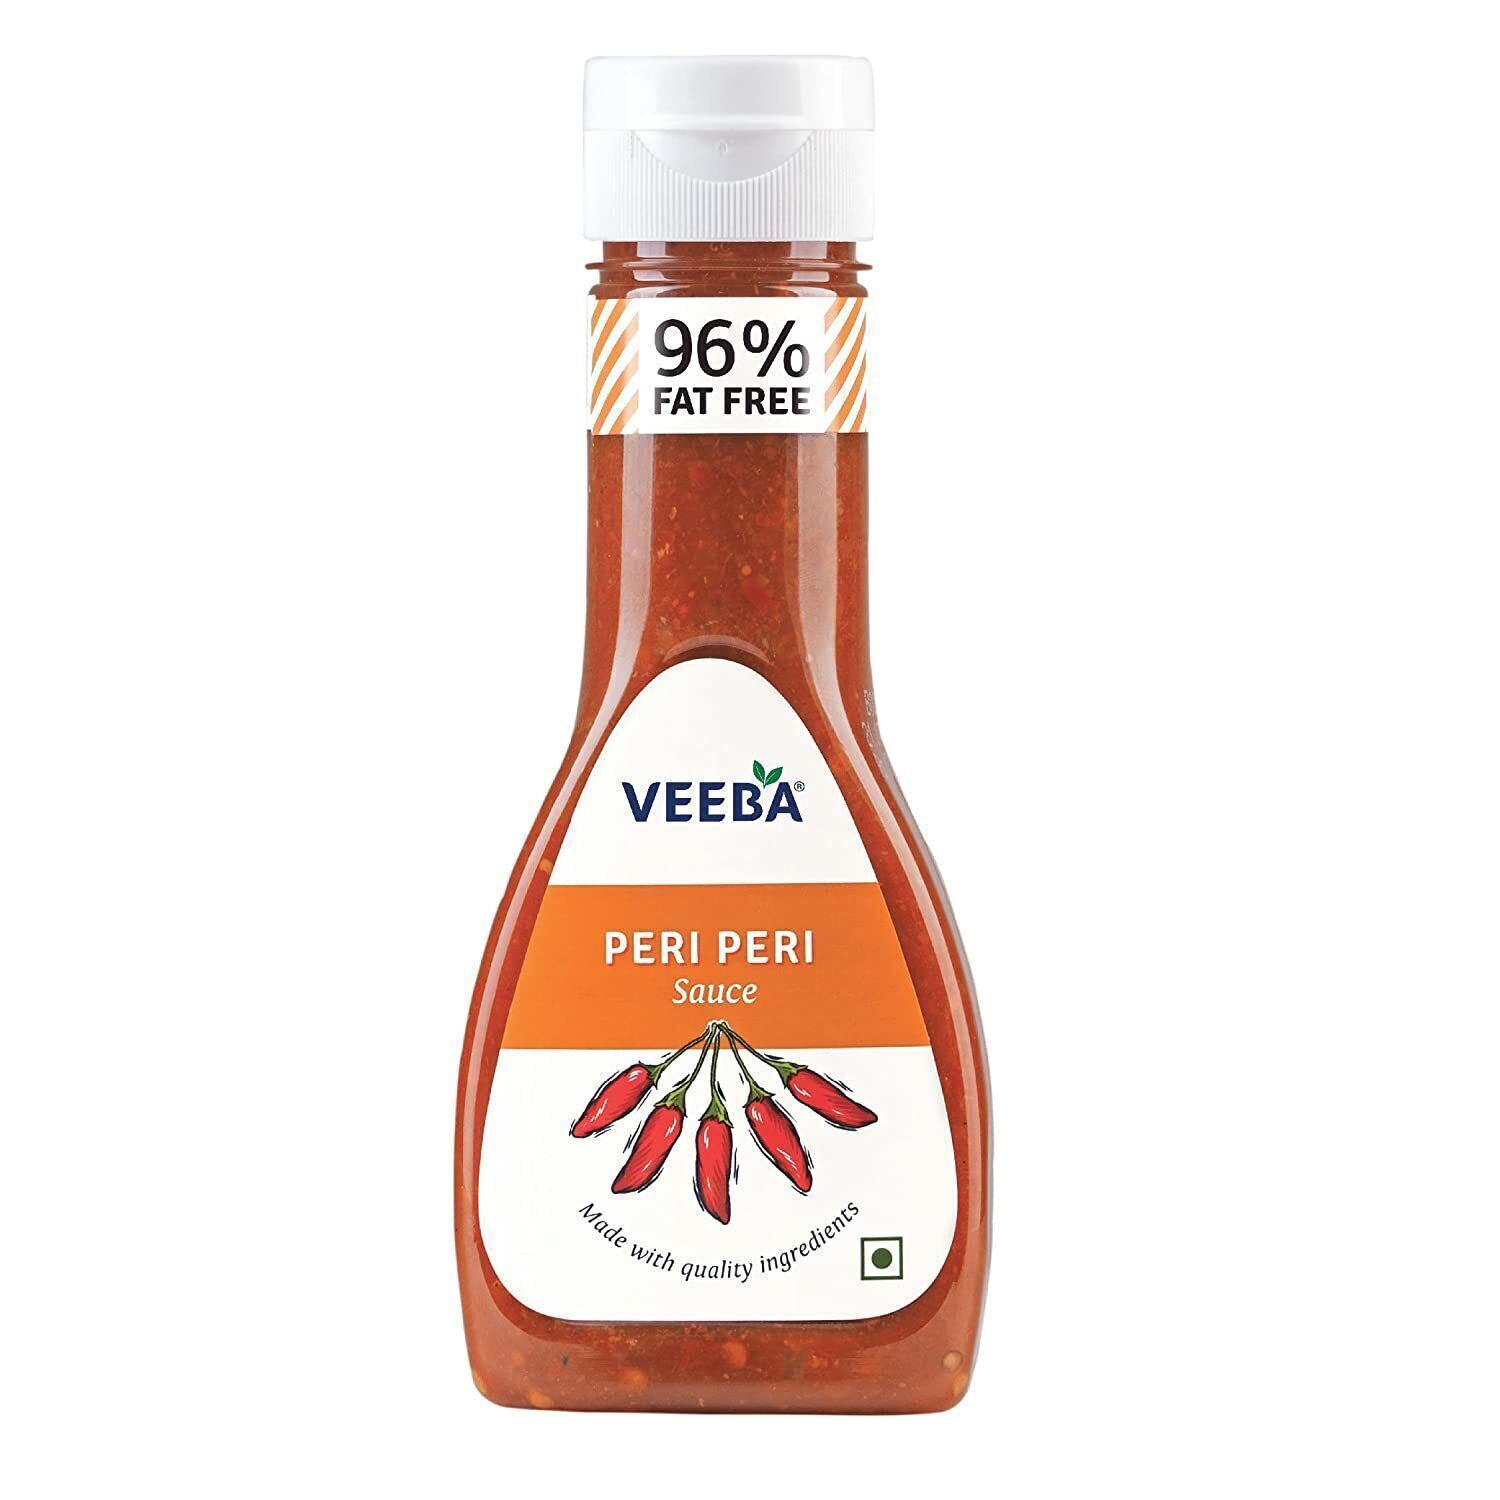 Veeba Peri Peri Sauce, 300gm - 100% Vegetarian - Fat Free